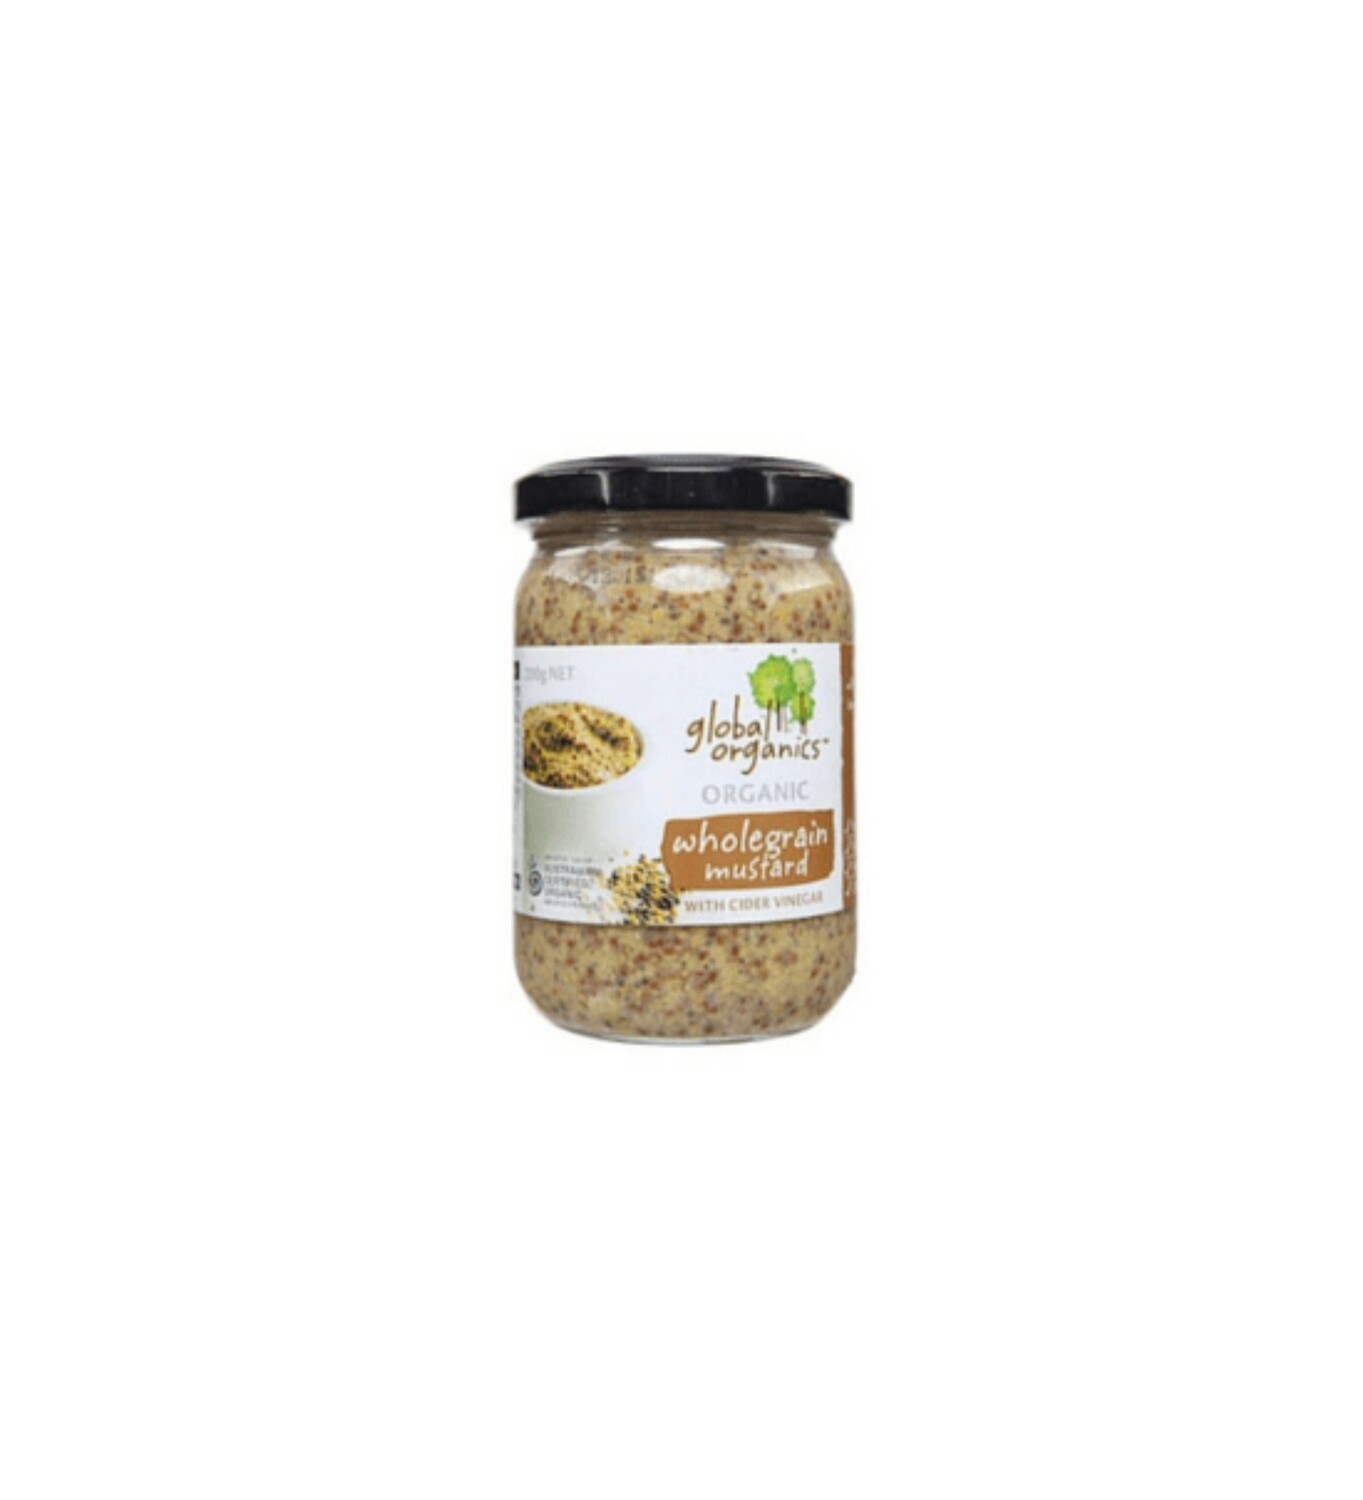 Global Organics Wholegrain Mustard Organic 290g